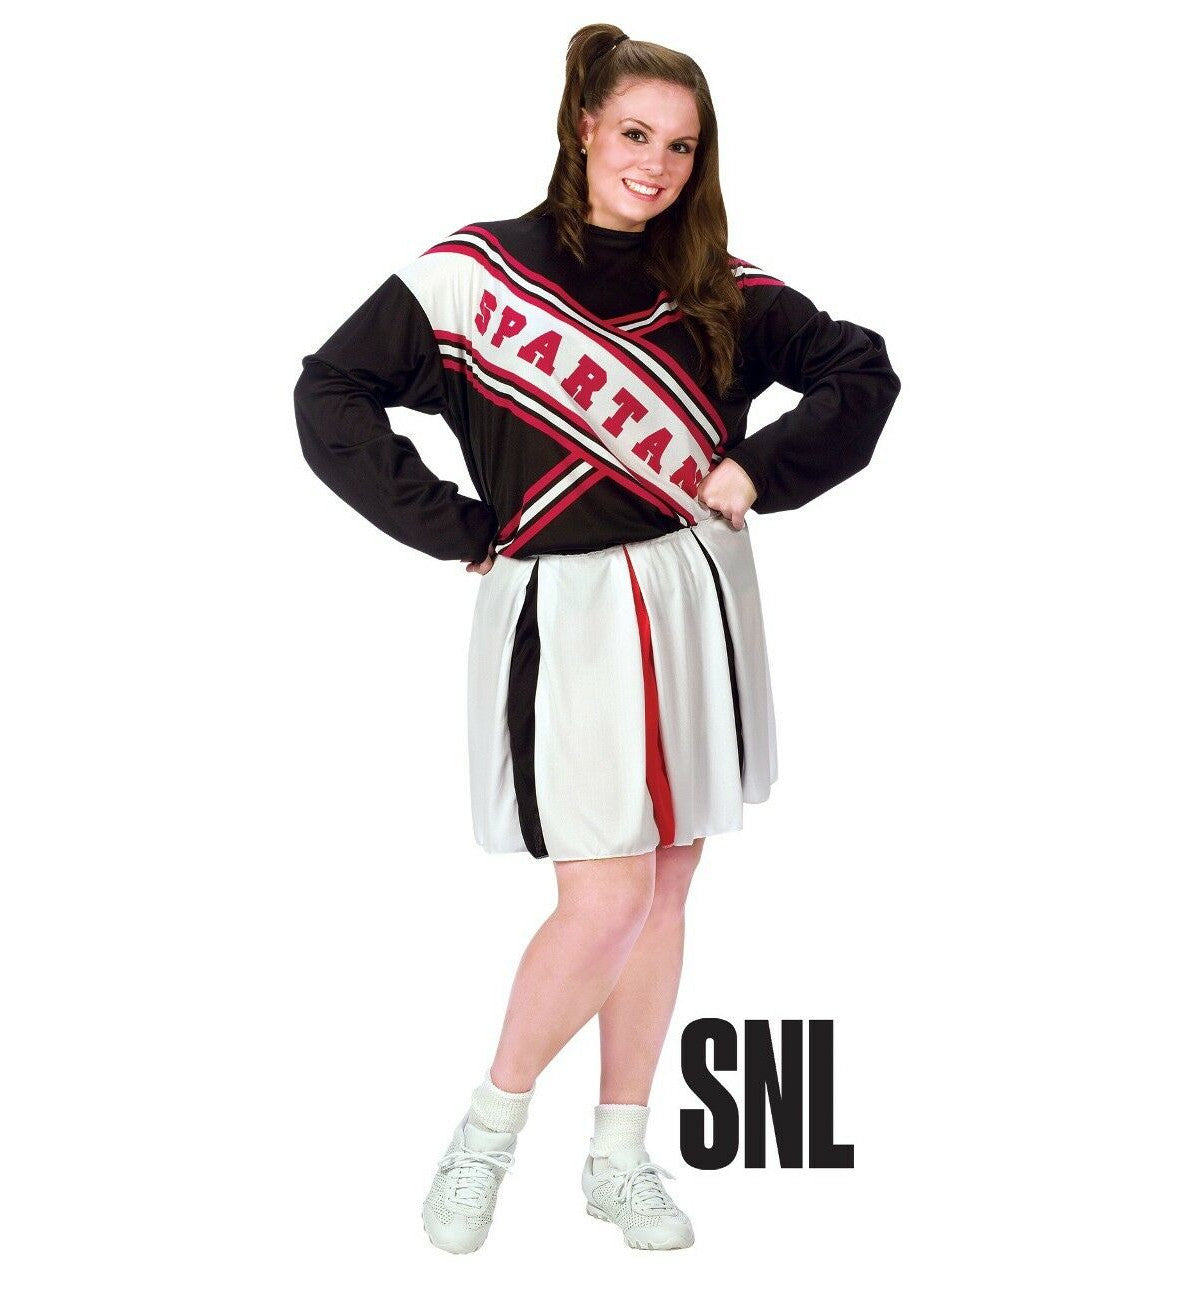 Spartan Cheerleader SNL Saturday Night Live Adult Women Costume